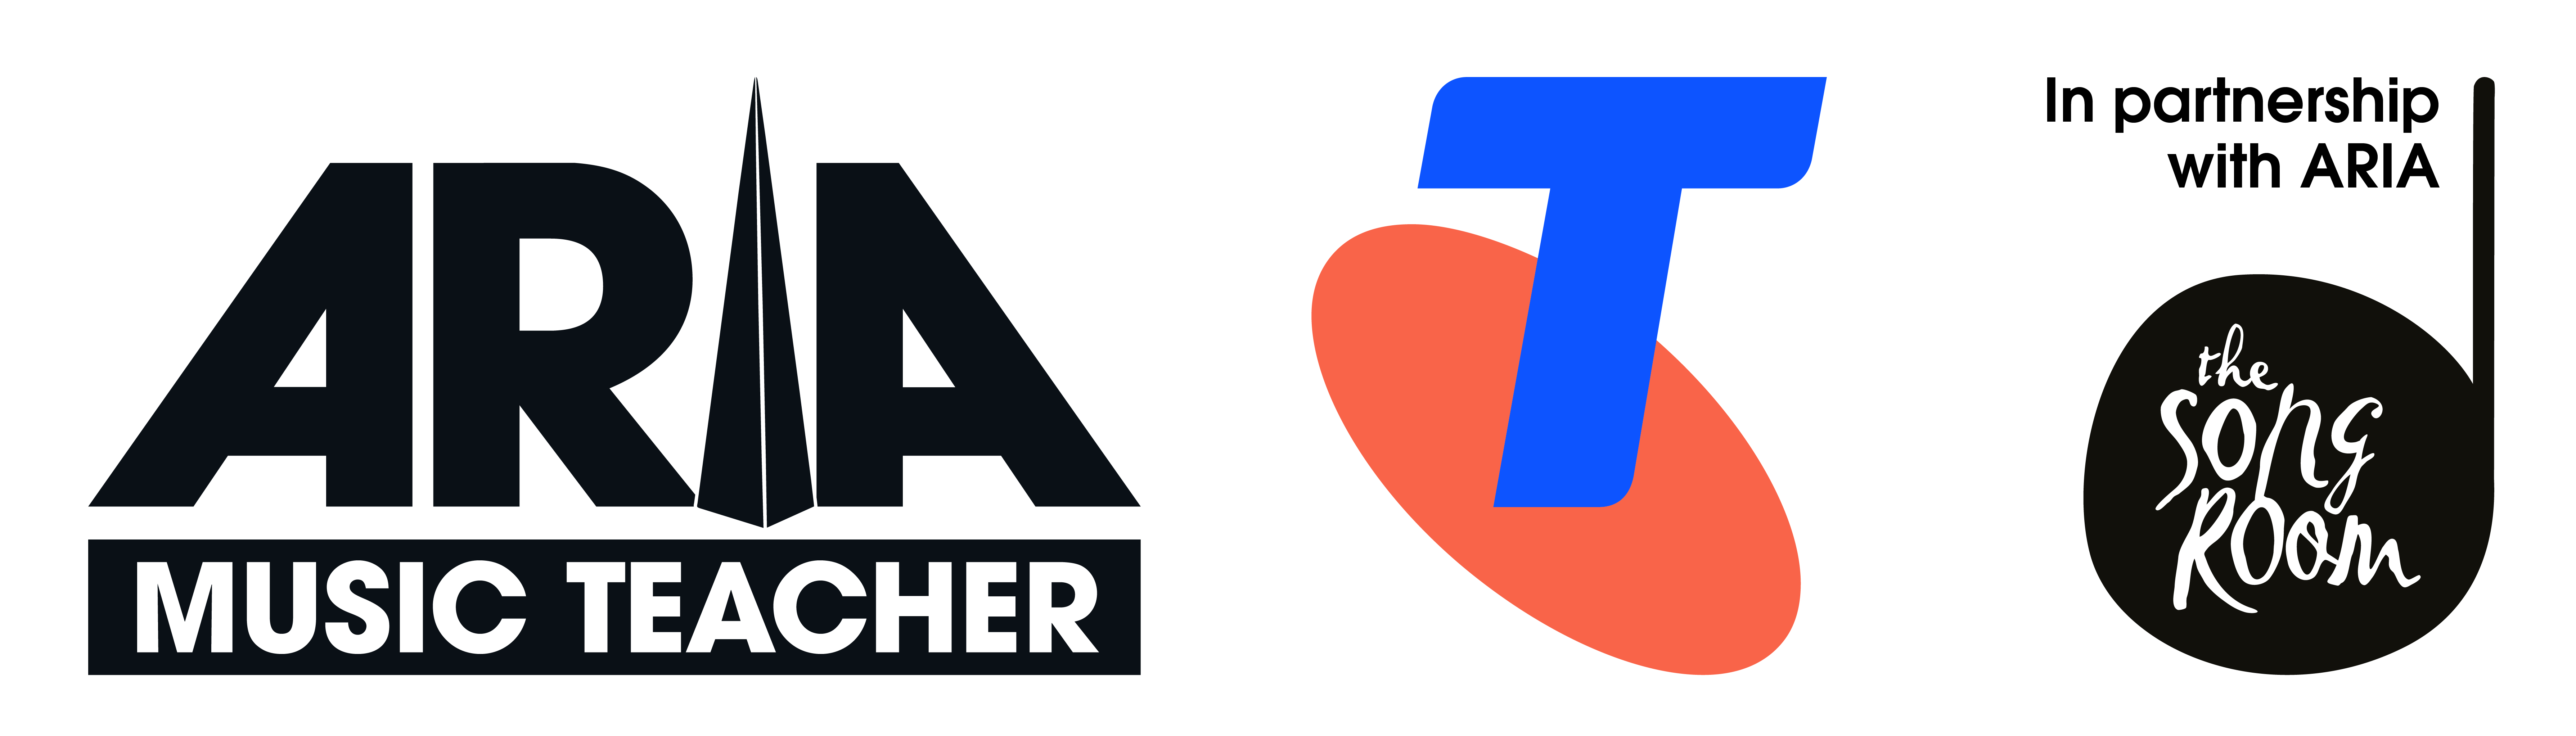 The Telstra ARIA Music Teacher Award is back for 2021